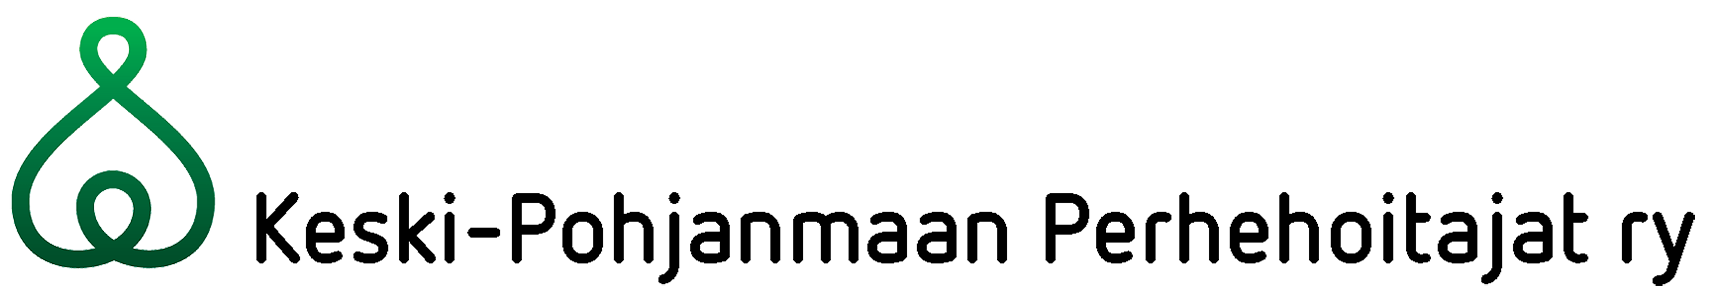 Keski-Pohjanmaan Perhehoitajat ry:n logo